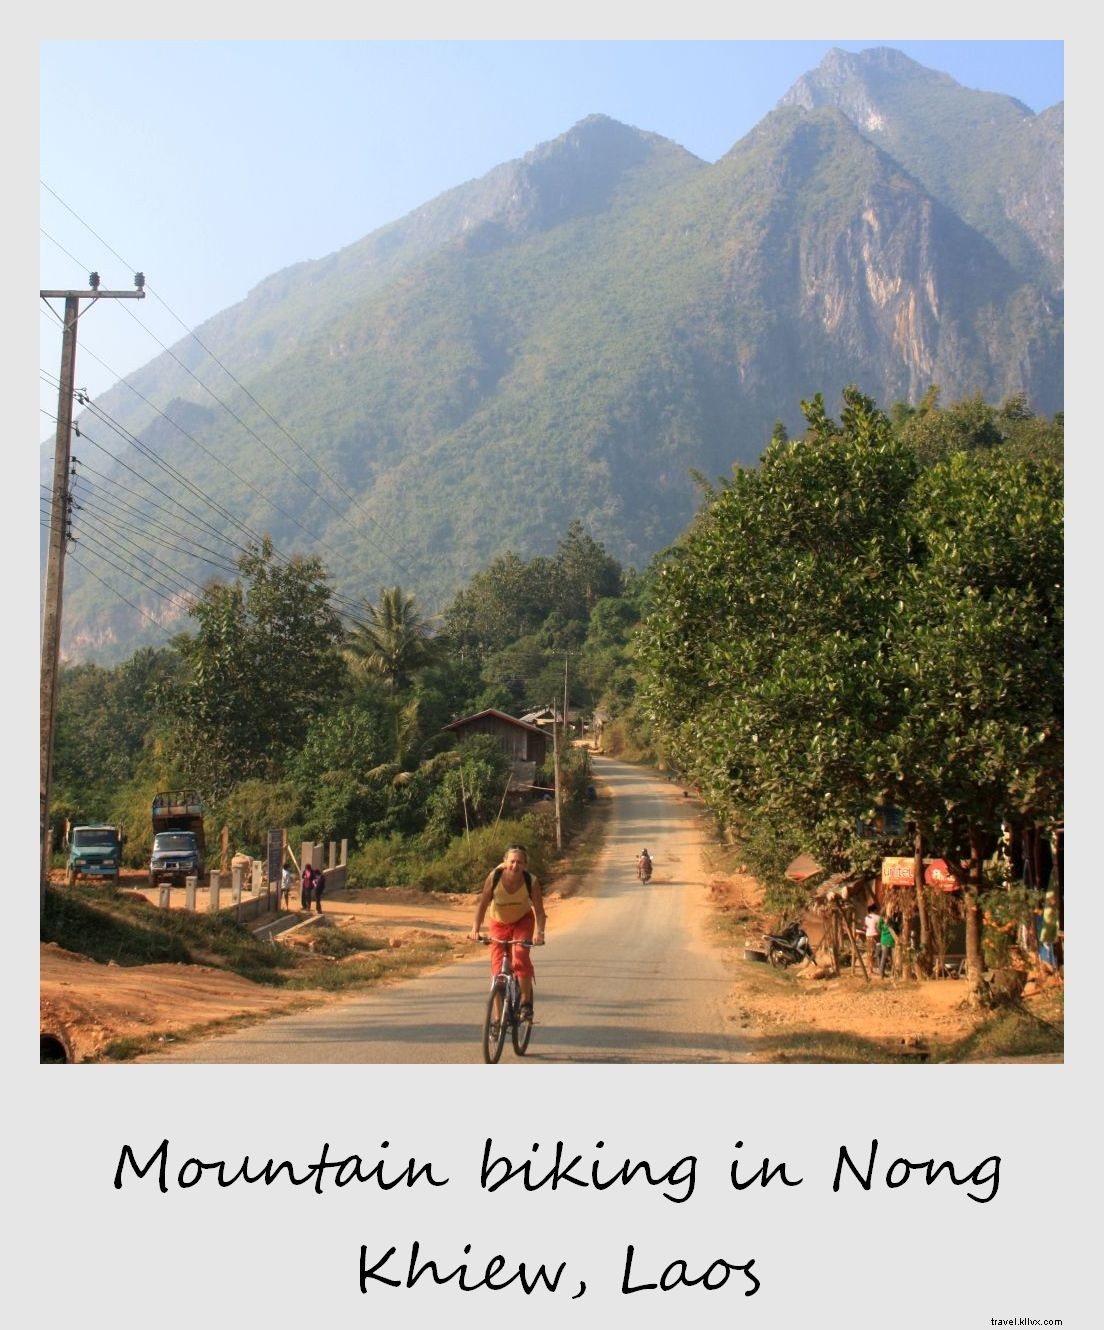 Polaroid minggu ini:Bersepeda gunung di Nong Khiew, Laos